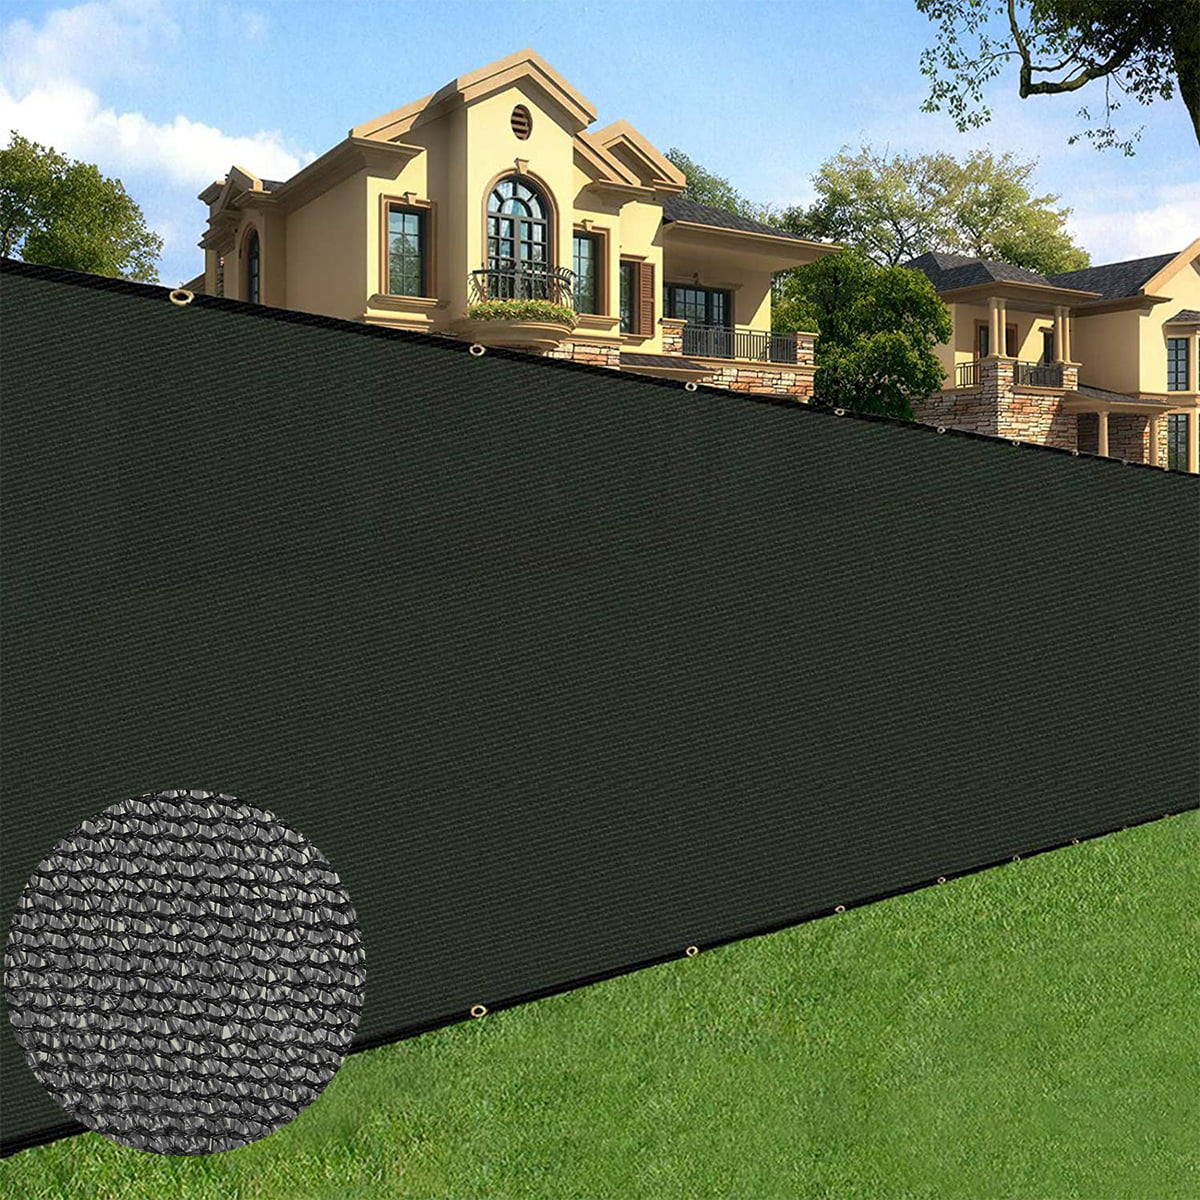 ALEKO 6x25Ft Black Fence Privacy Screen Outdoor Backyard Windscreen Mesh Fabric 